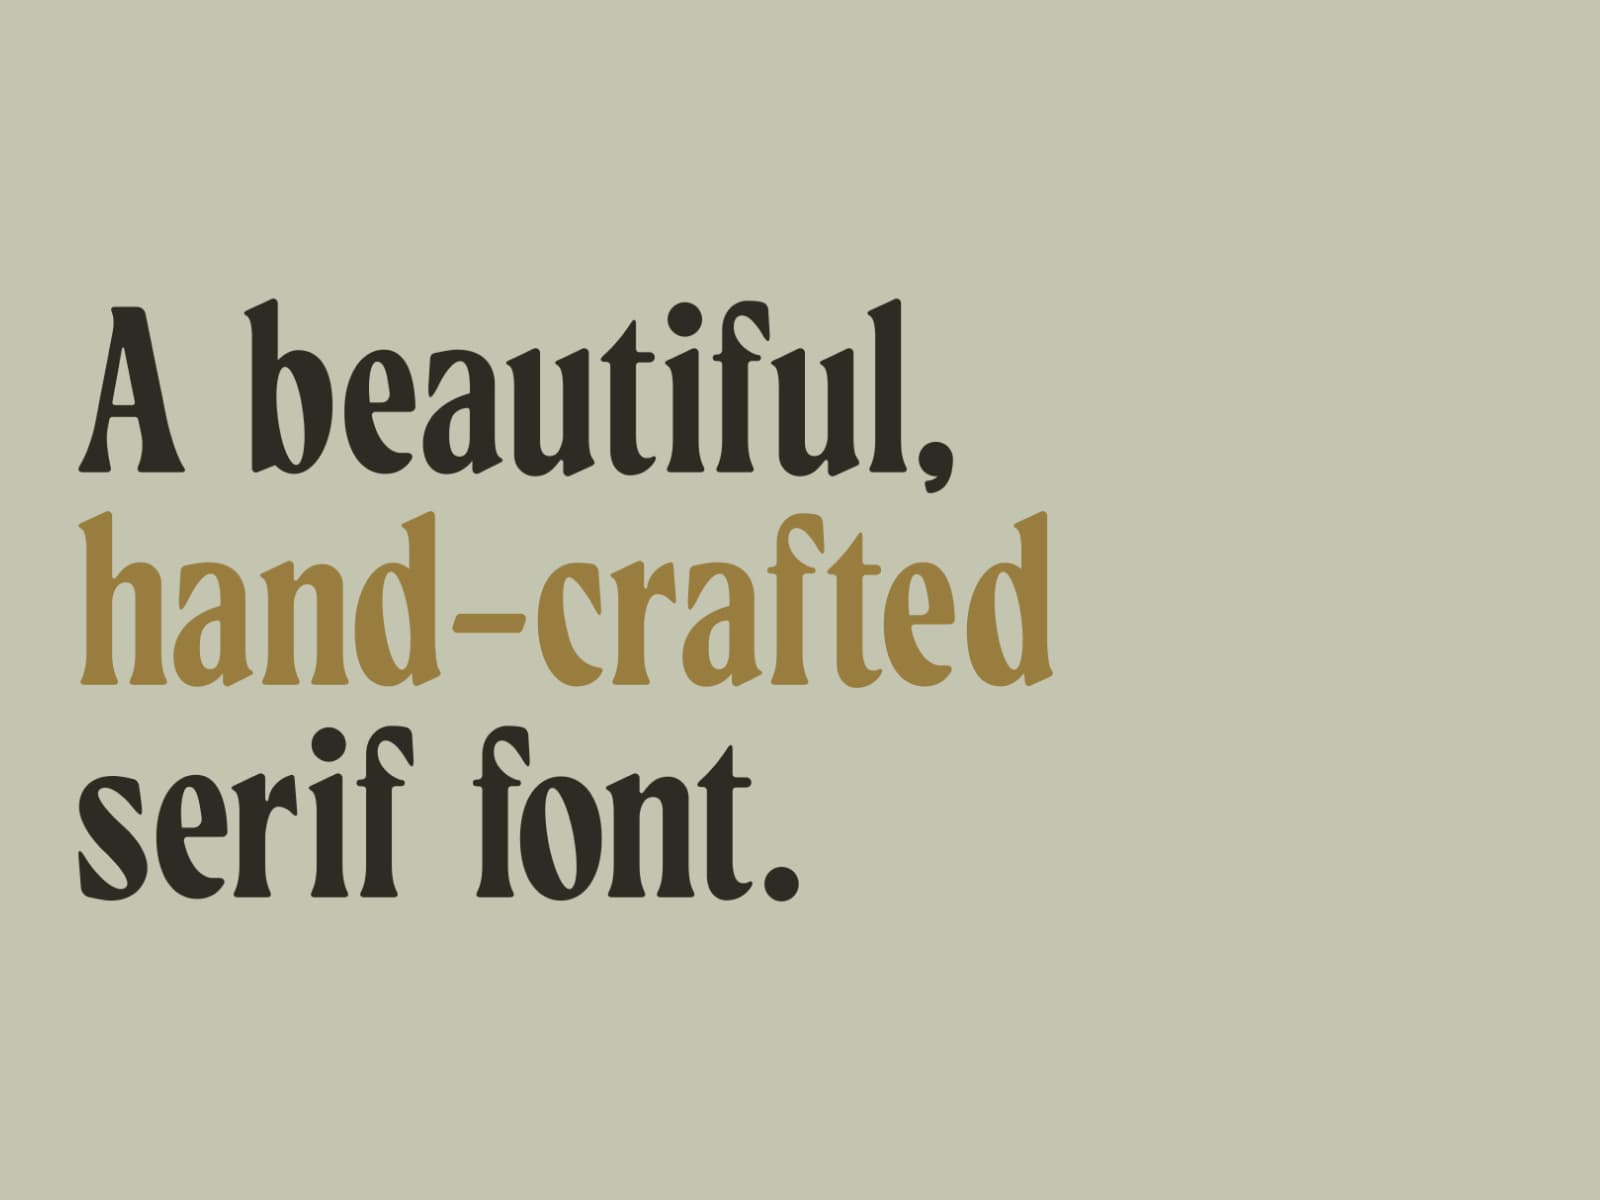 southport-serif-font-2182-02